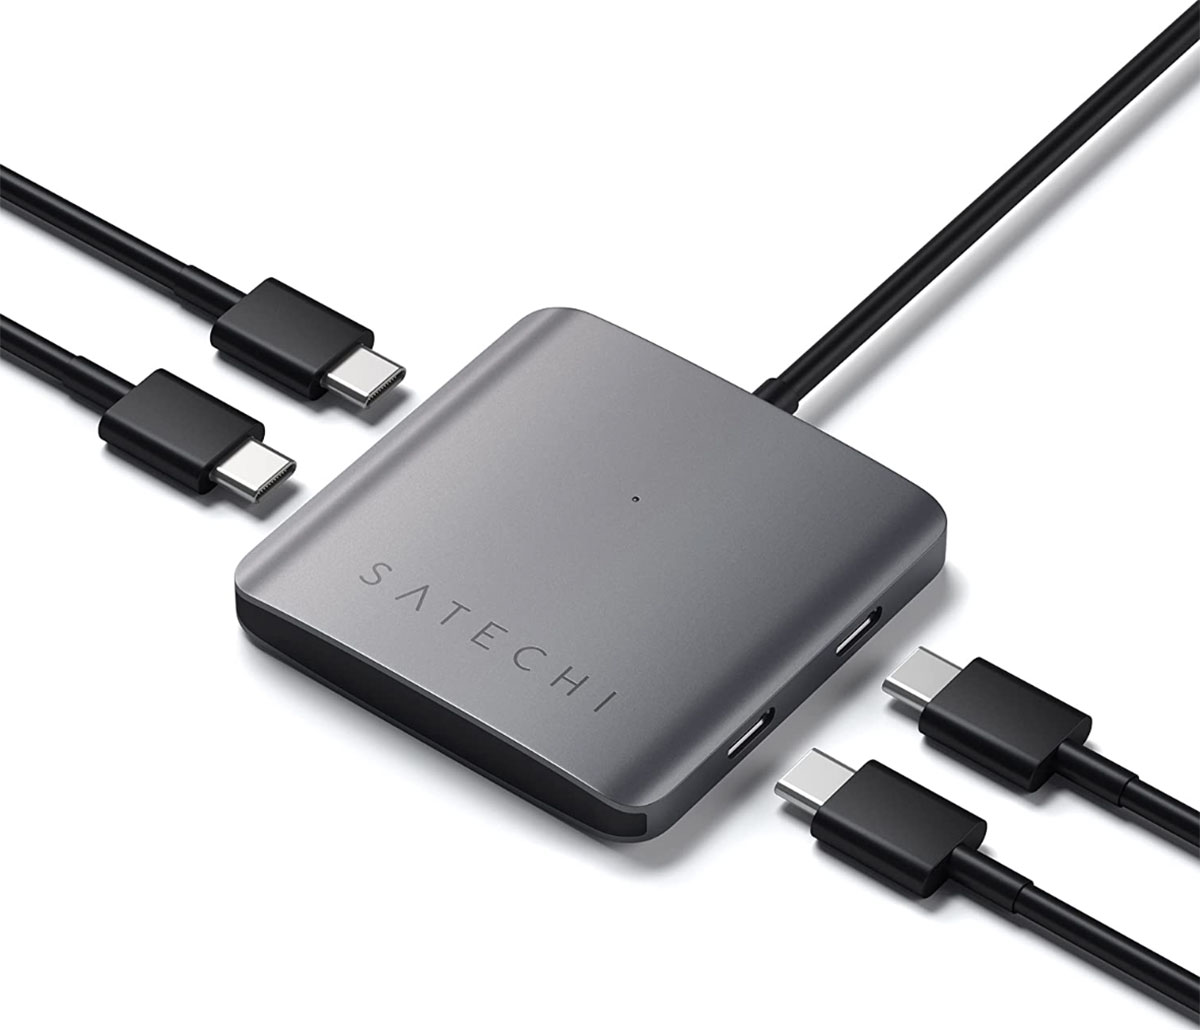 Satechi 4-Port USB-C Hub - Best hub for multiple USB-C ports